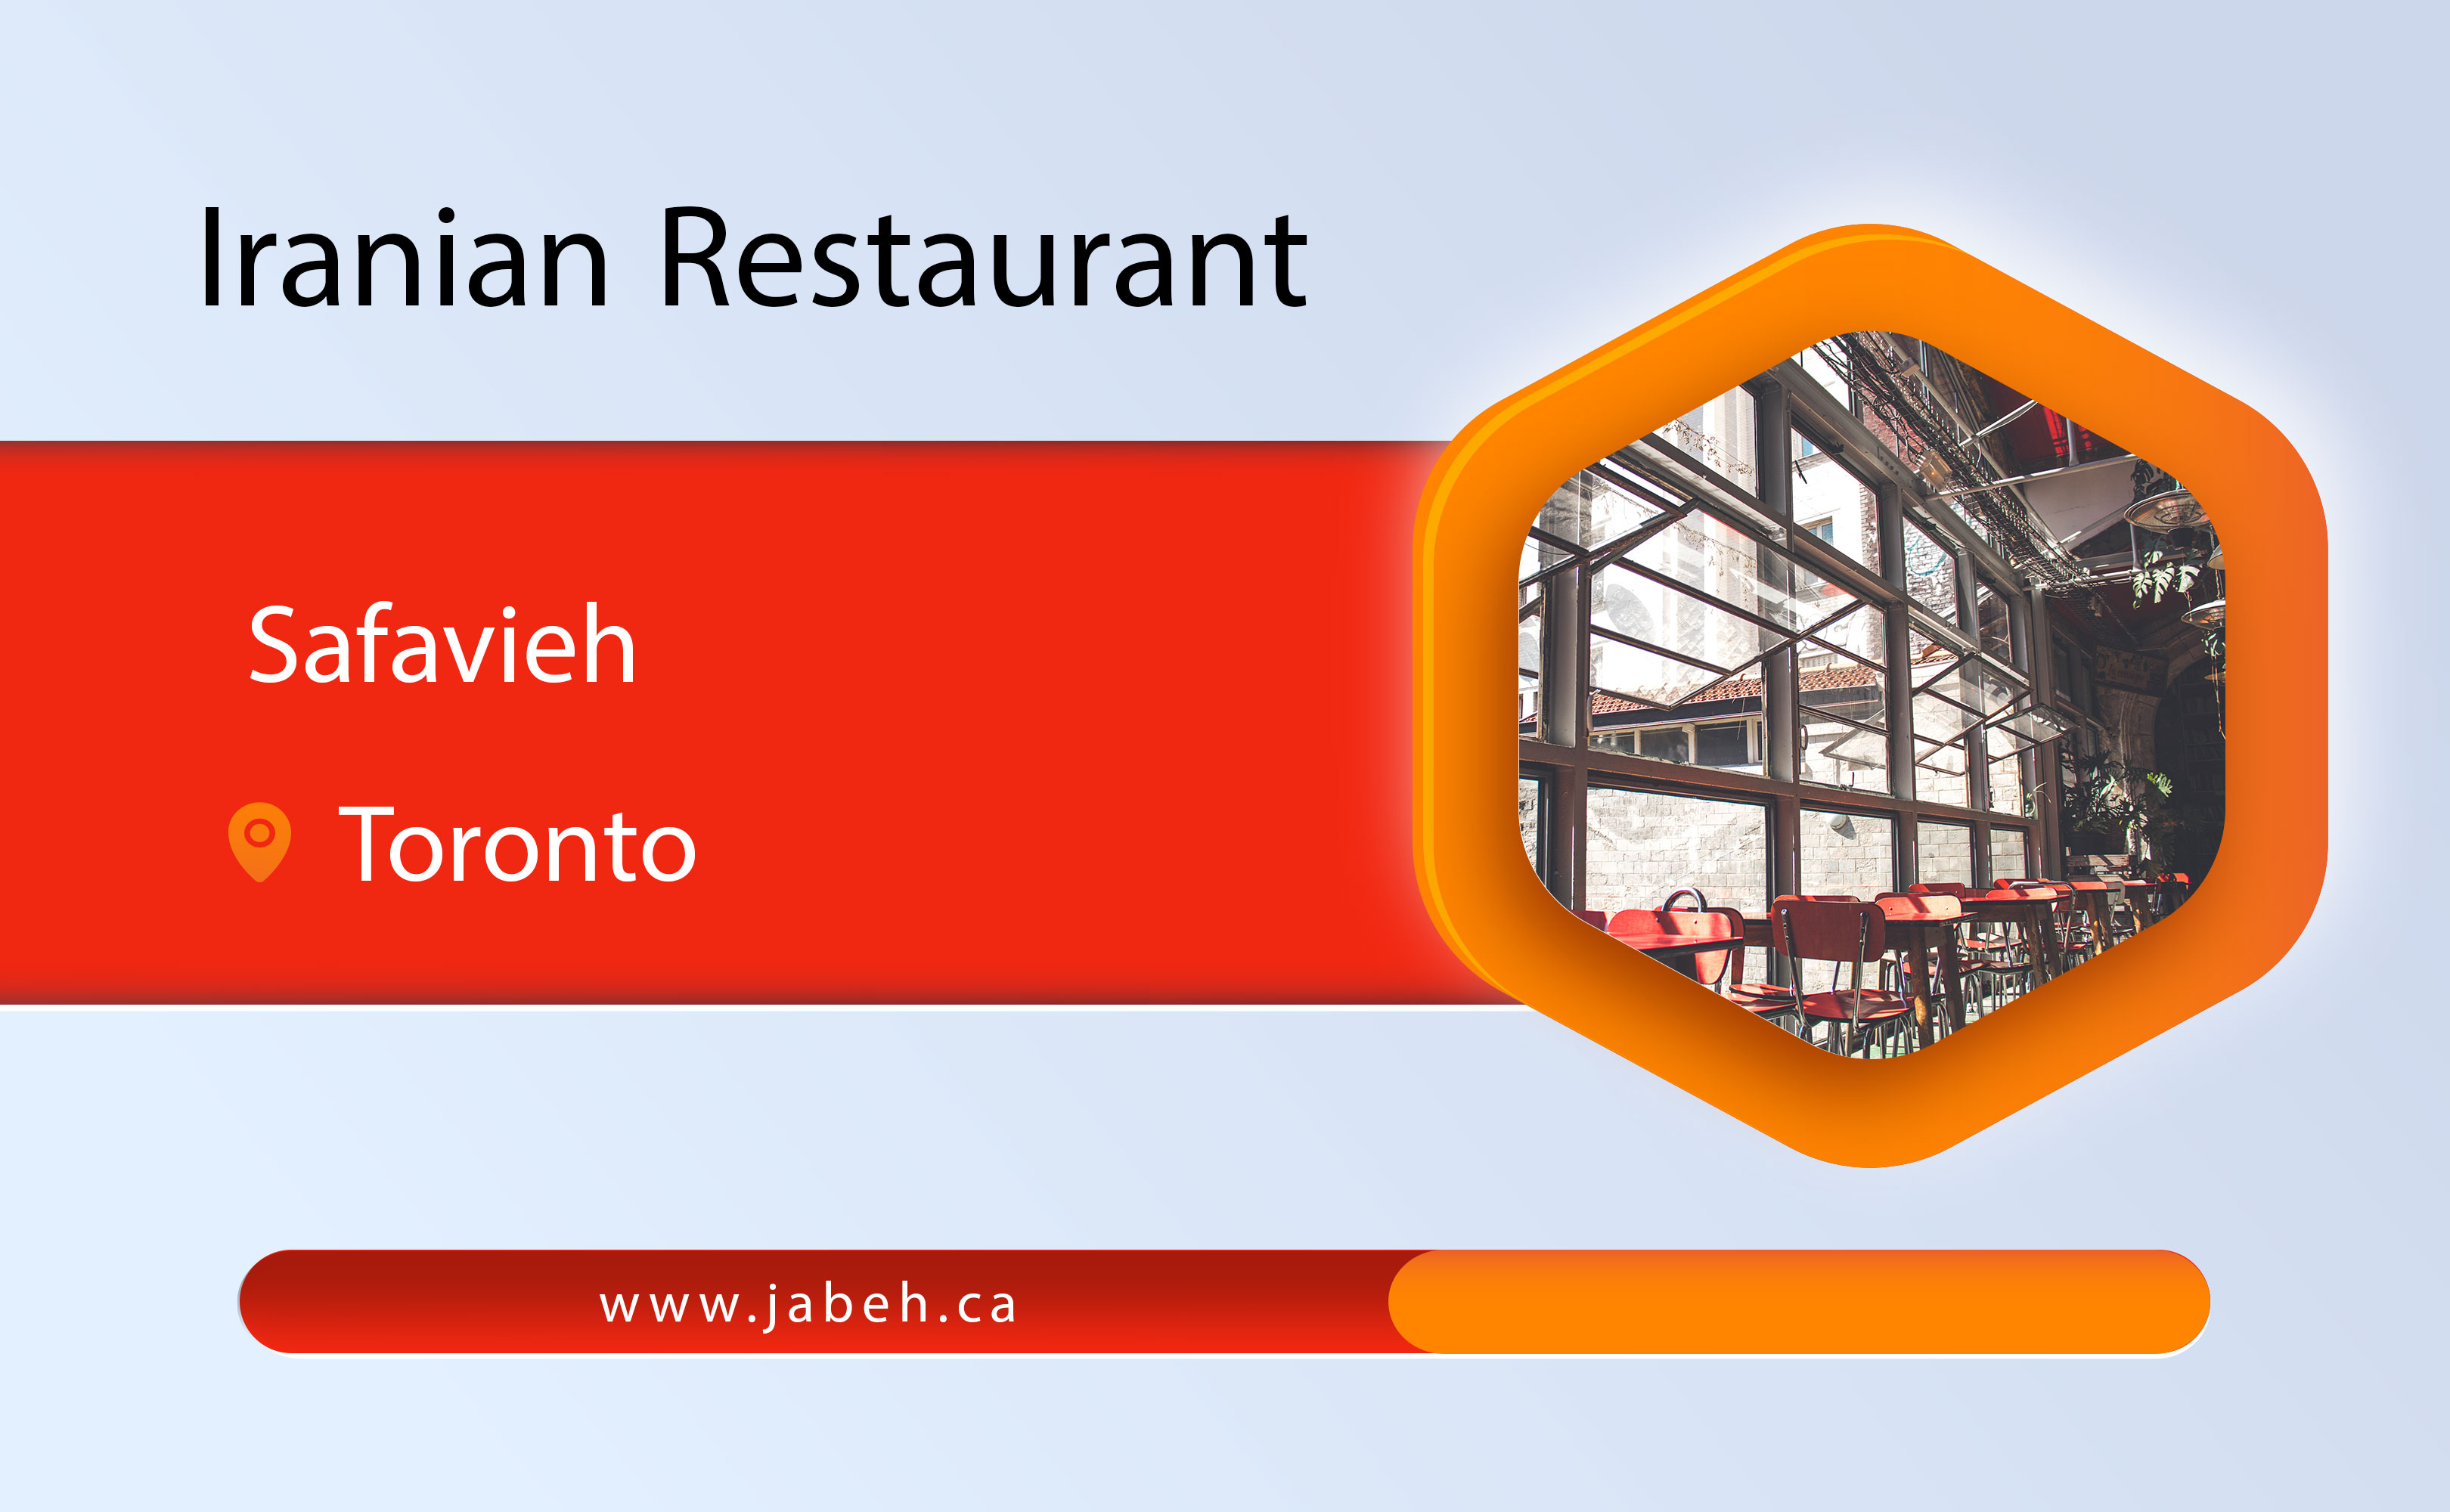 Safavieh Iranian Restaurant in Toronto